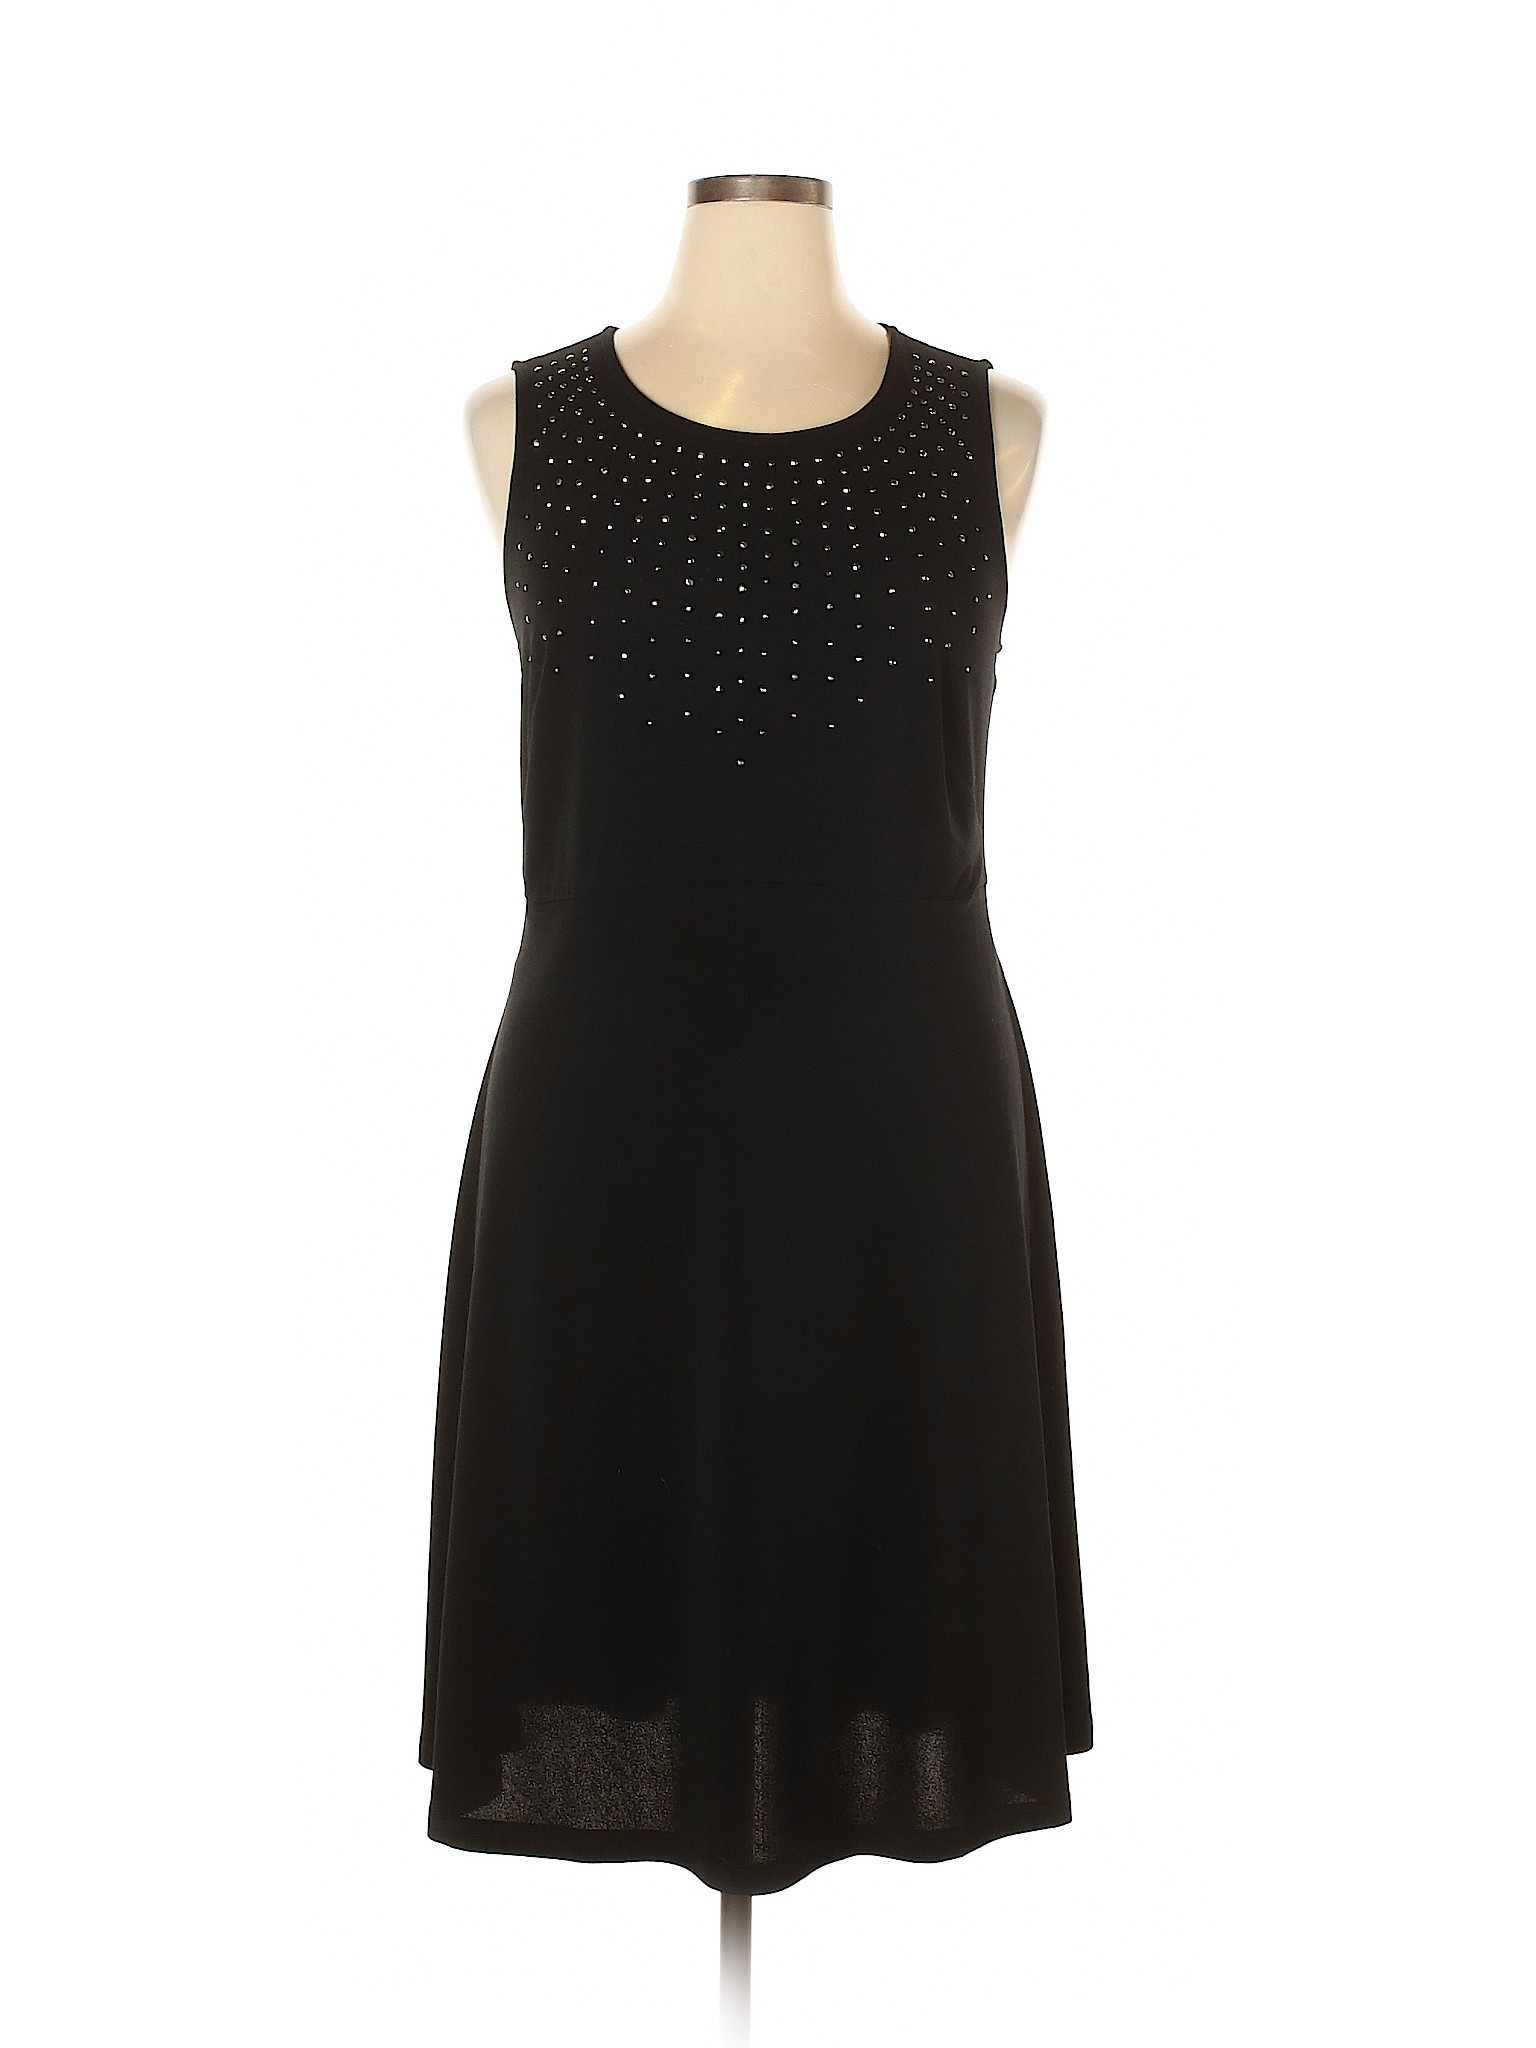 Apt. 9 Solid Black Cocktail Dress Size 0X (Plus) - 80% off | thredUP